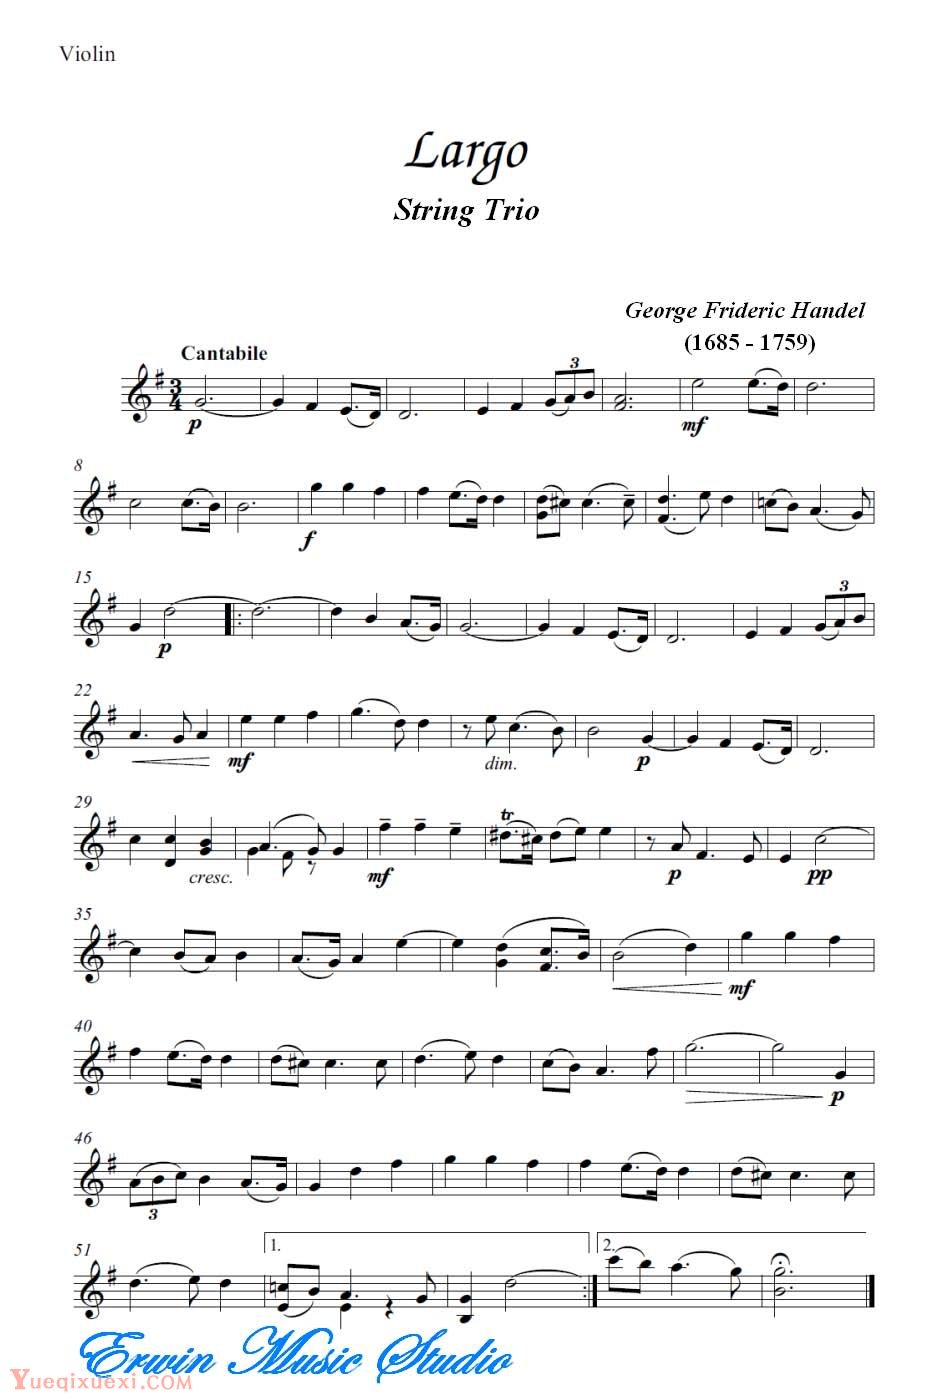 乔治 弗里德里克 亨德尔-广板 弦乐三重奏分谱Violin  George Frideric Handel,  Largo